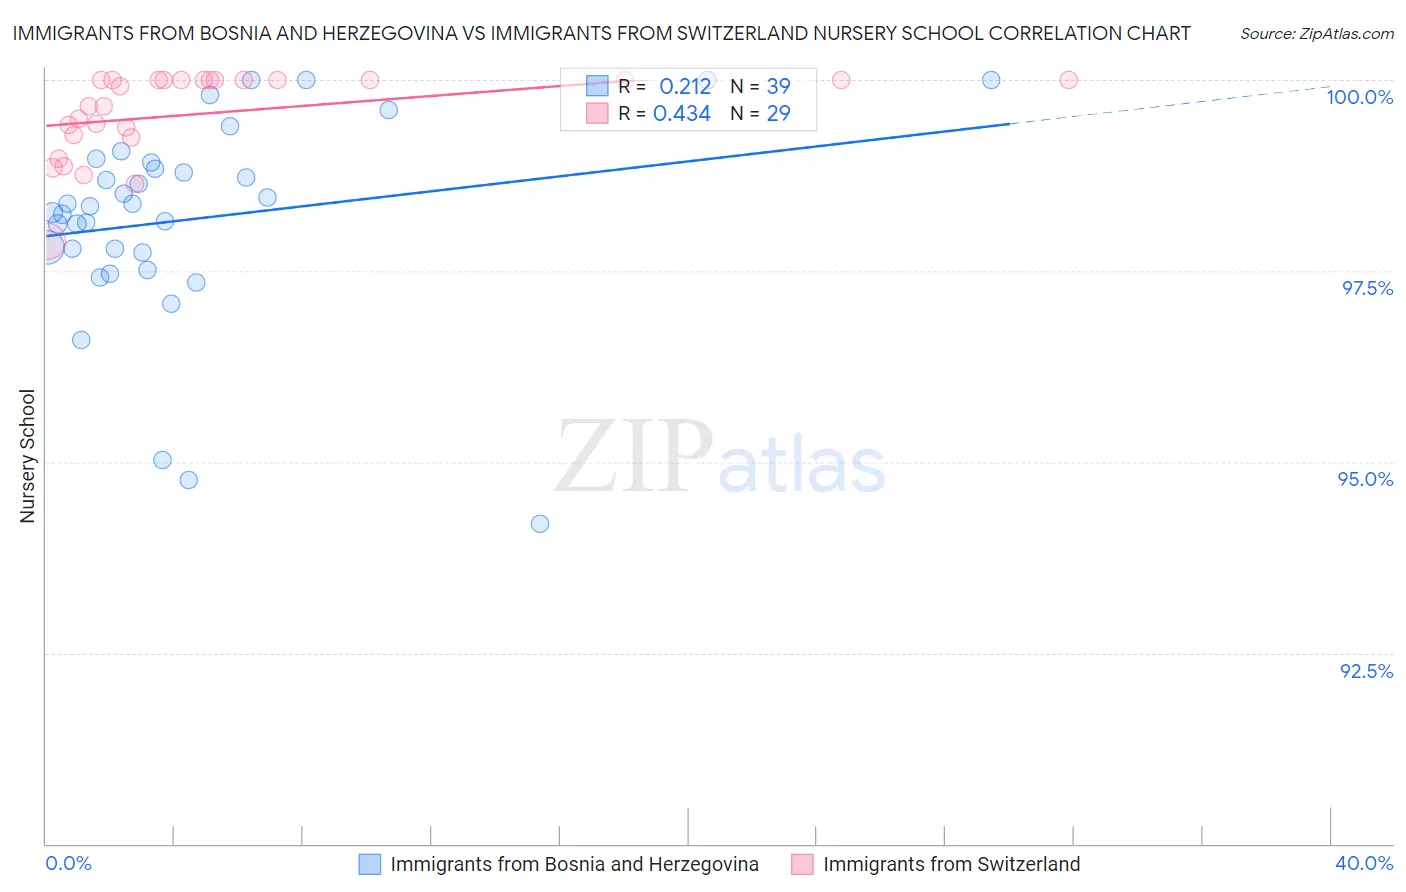 Immigrants from Bosnia and Herzegovina vs Immigrants from Switzerland Nursery School